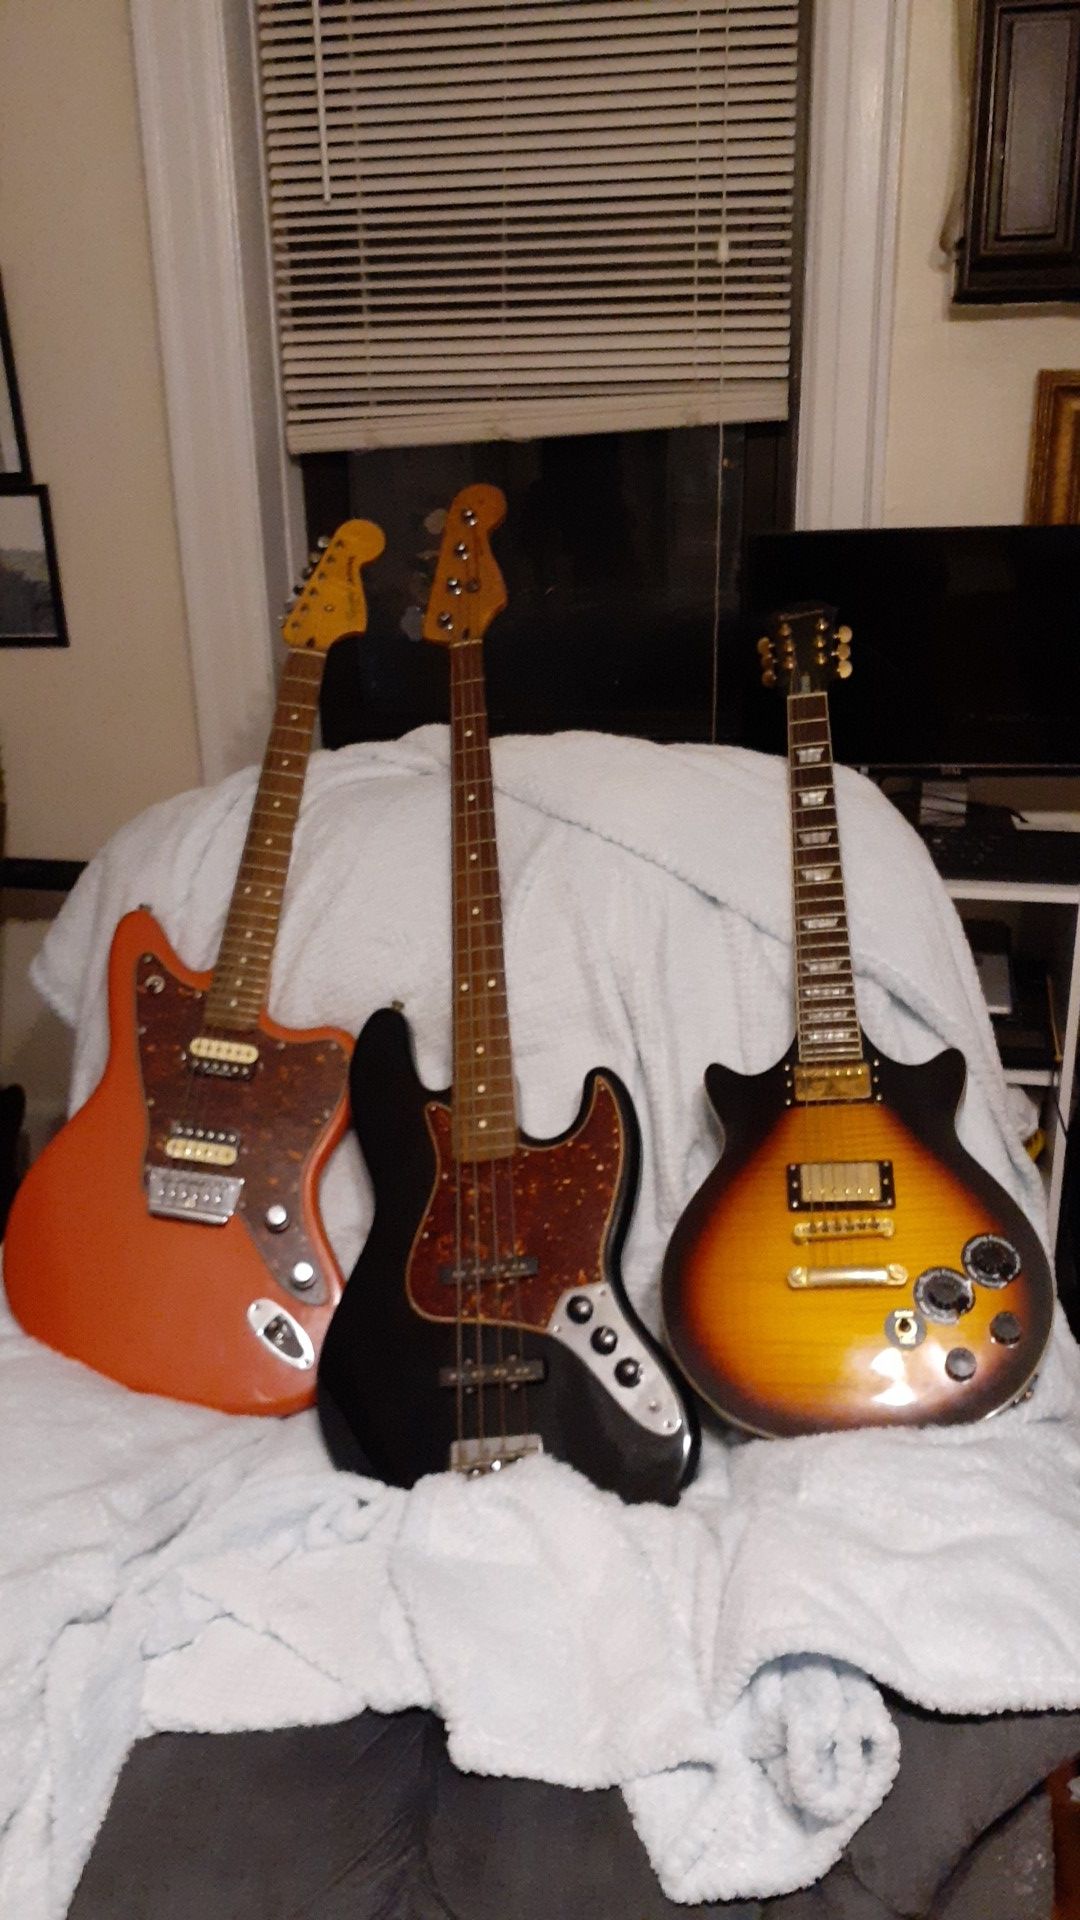 2 guitars and a Fender bass